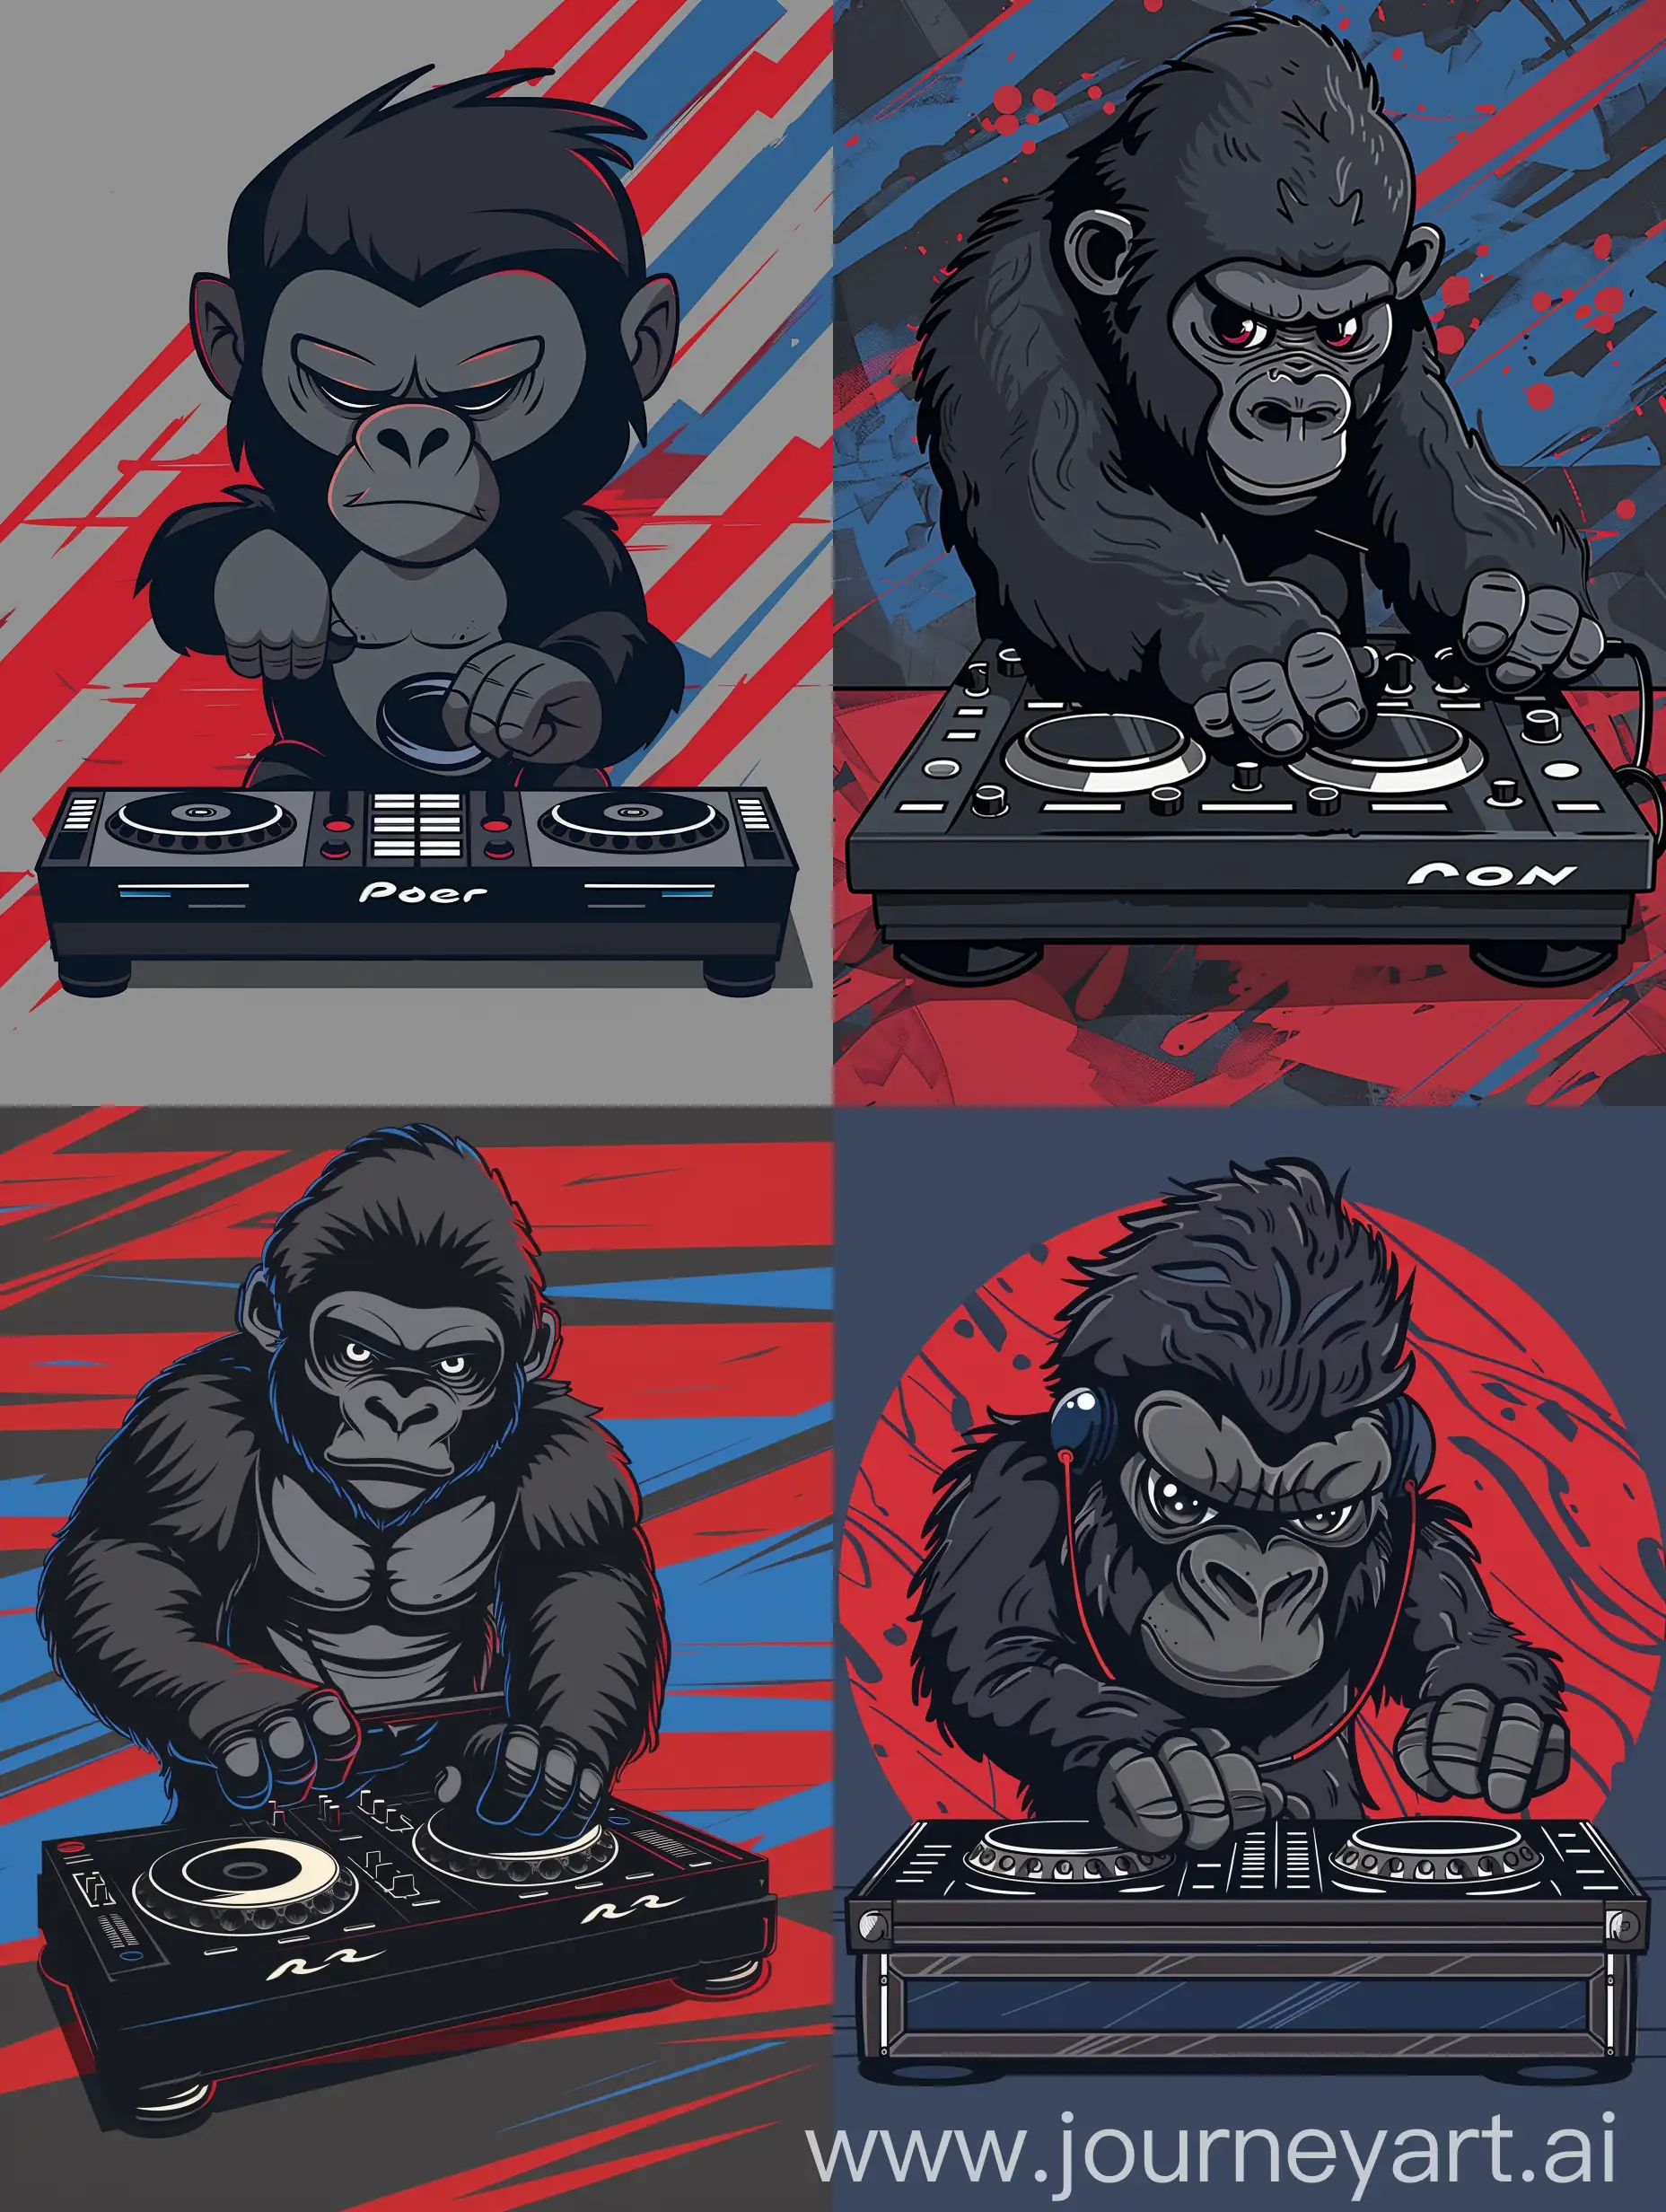 Chibi-Anime-Gorilla-DJ-Vibrant-Red-Blue-and-Grey-Background